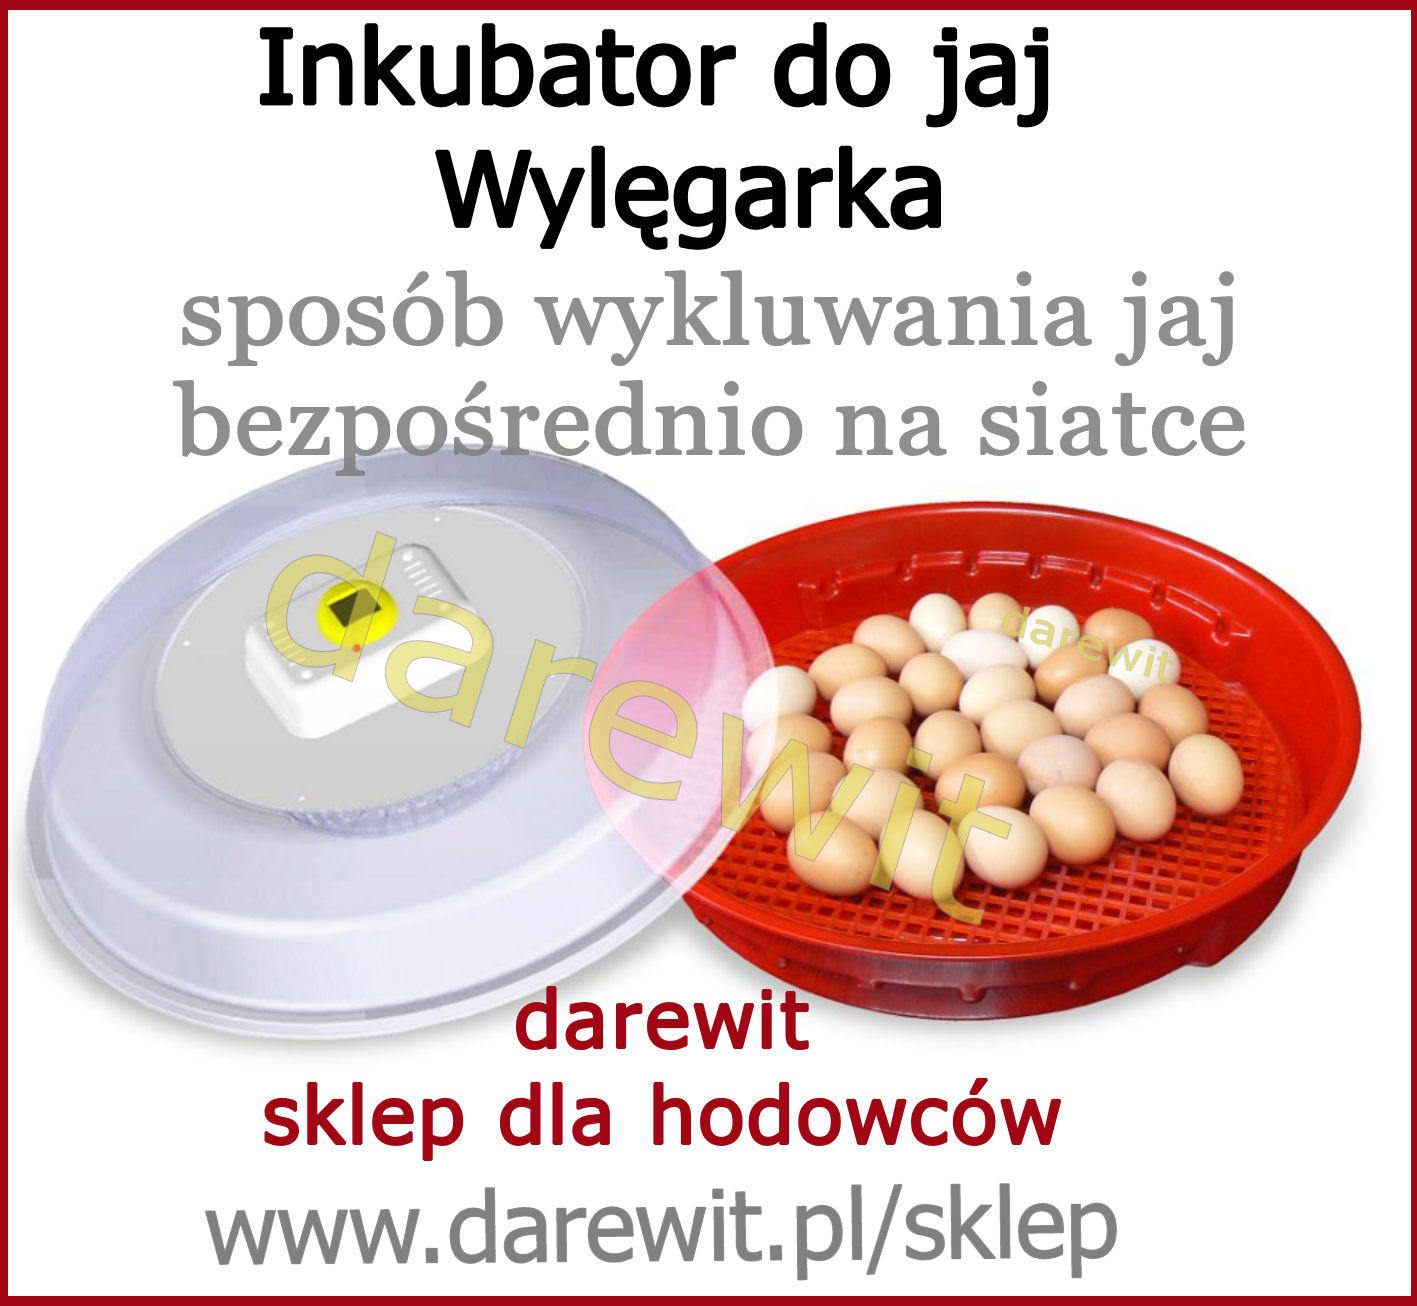 Wylęgarka klujnik jaj Pulsor - ile jaj mieści inkubator - darewit